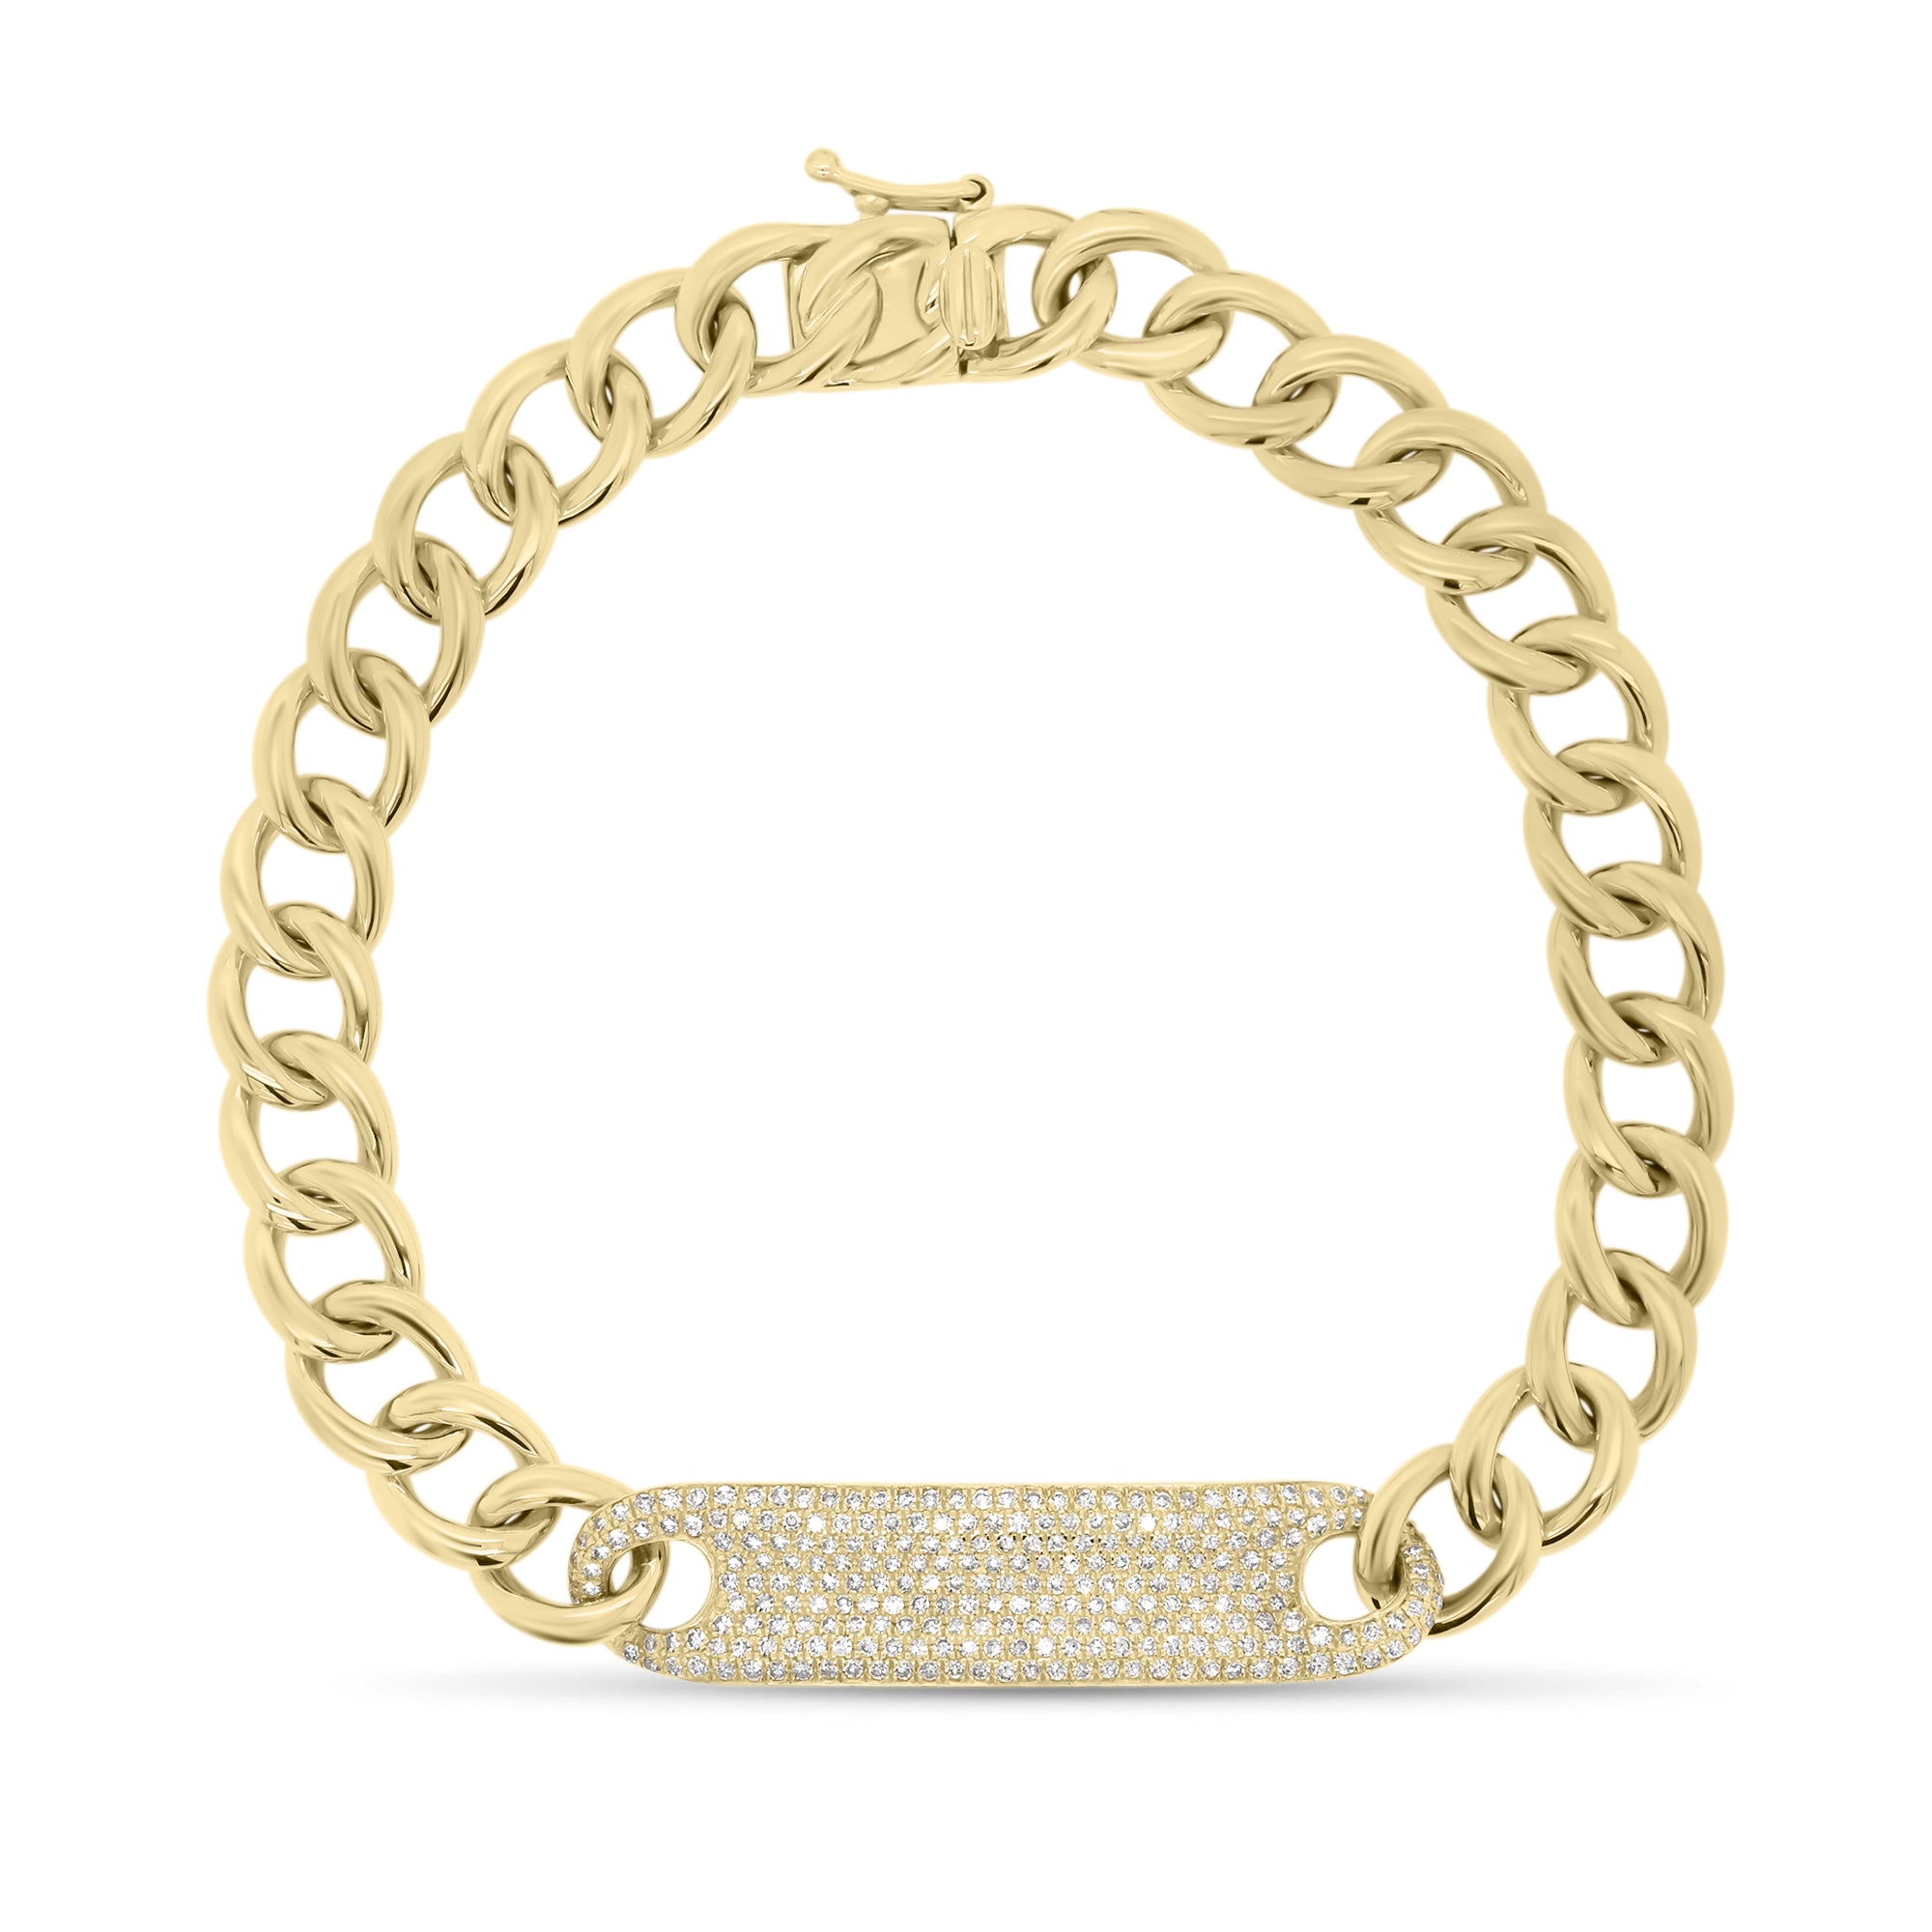 Pave Diamond ID Bracelet - 14K yellow gold weighing 17.15 grams - 255 round diamonds totaling 0.72 carats